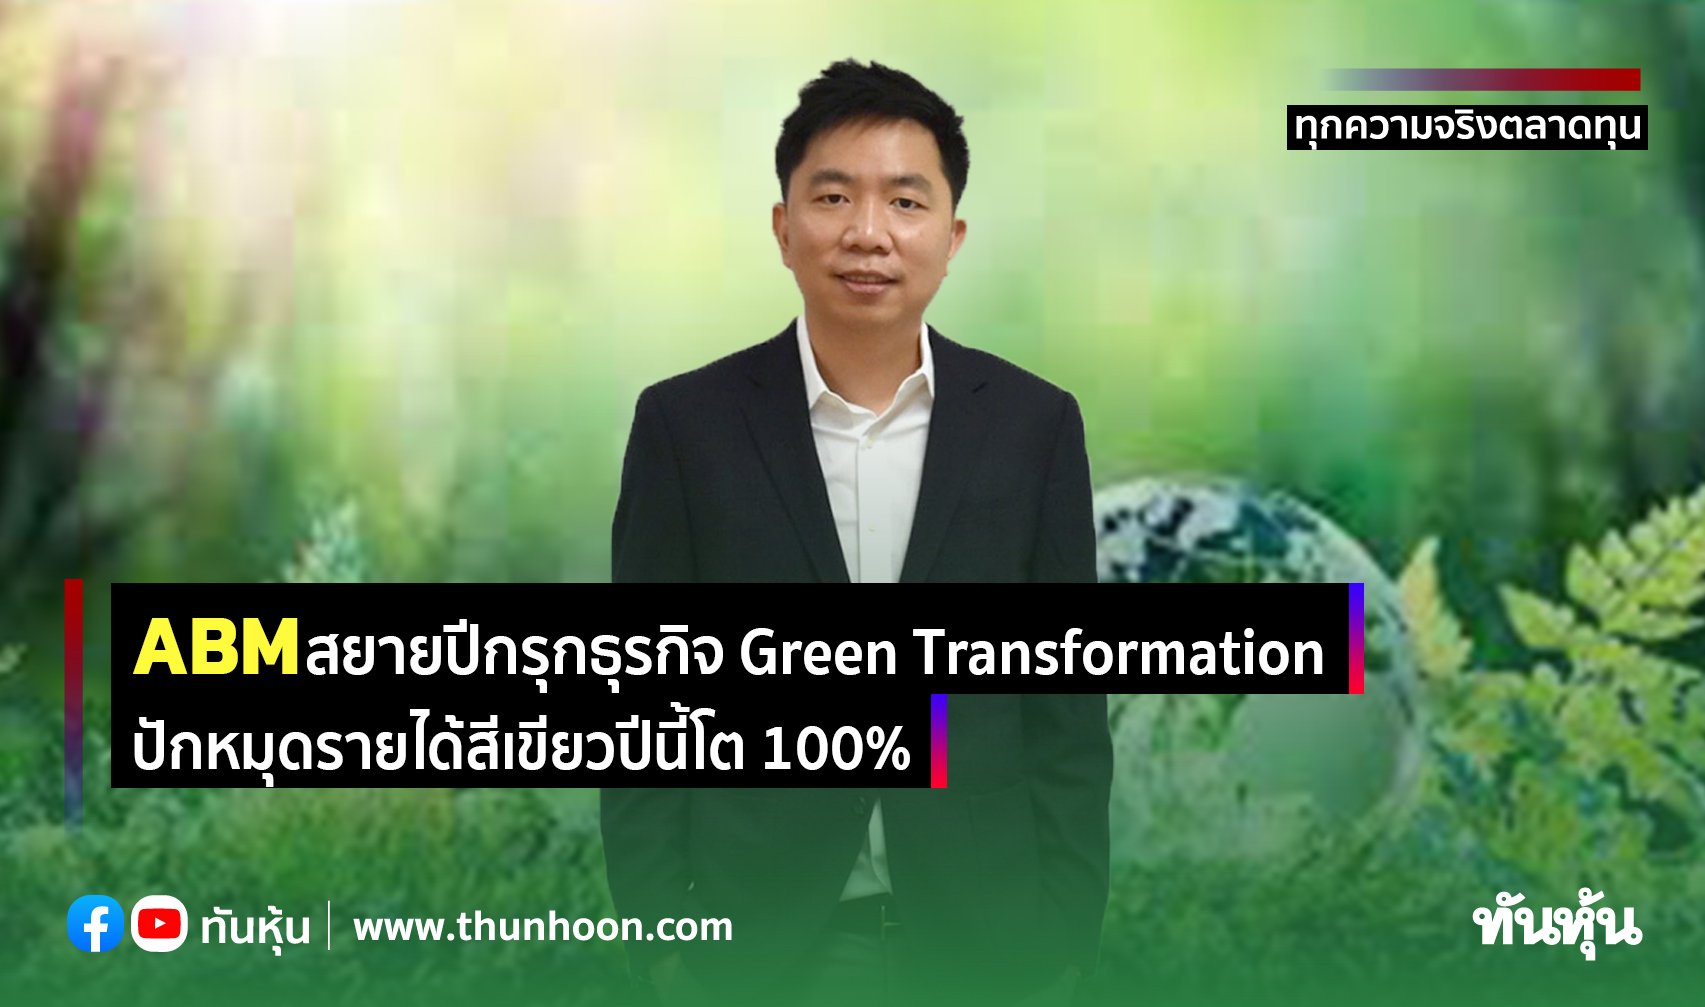 ABM สยายปีกรุกธุรกิจ Green Transformation ปักหมุดรายได้สีเขียวปีนี้โต 100%